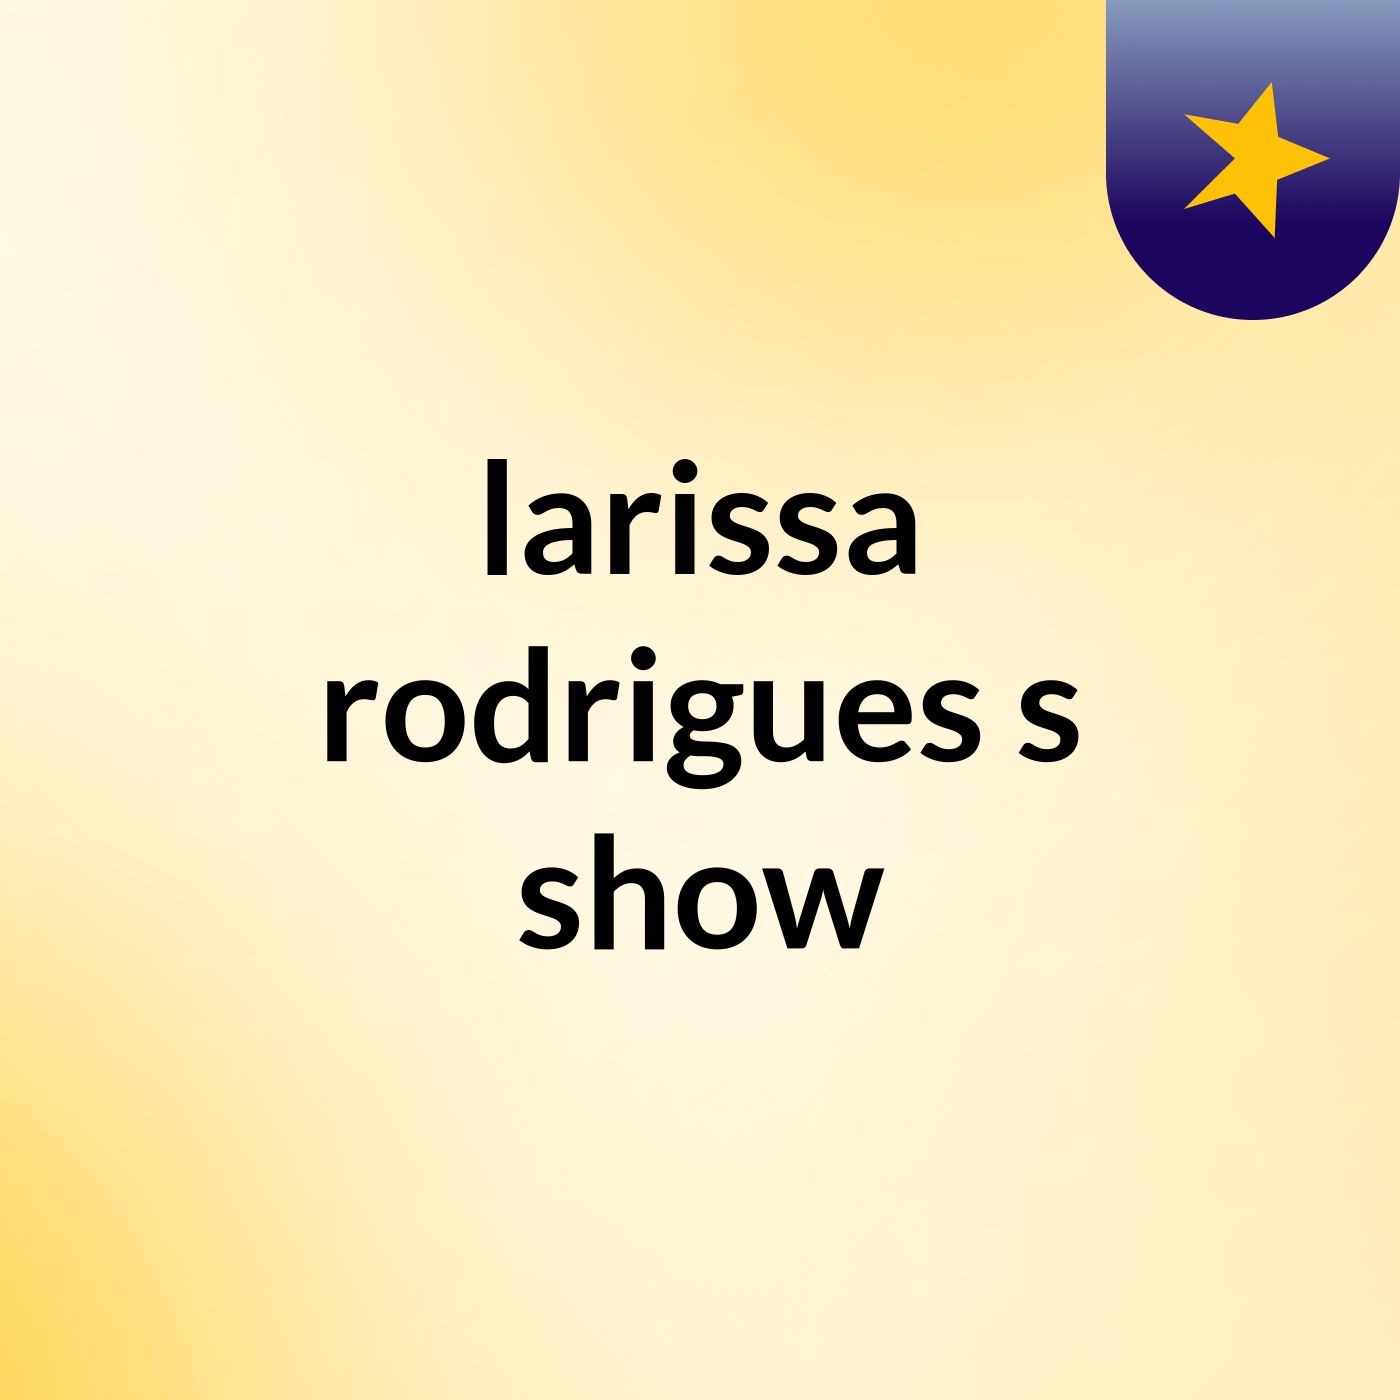 larissa rodrigues's show